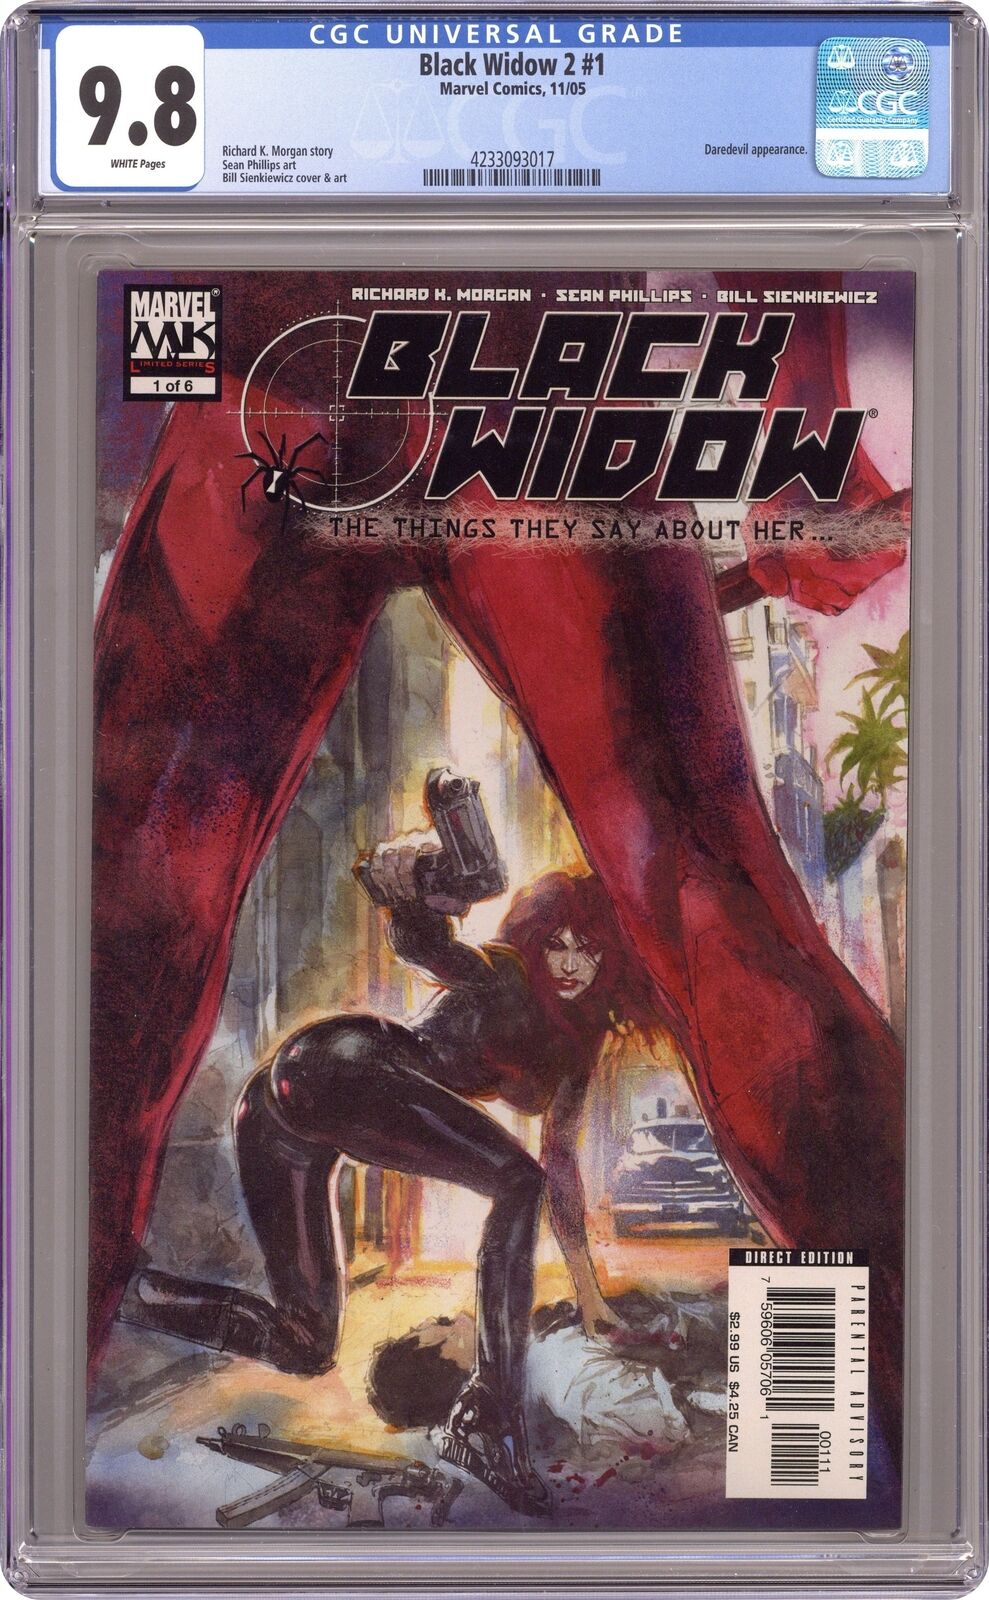 Black Widow #1 CGC 9.8 2005 4233093017